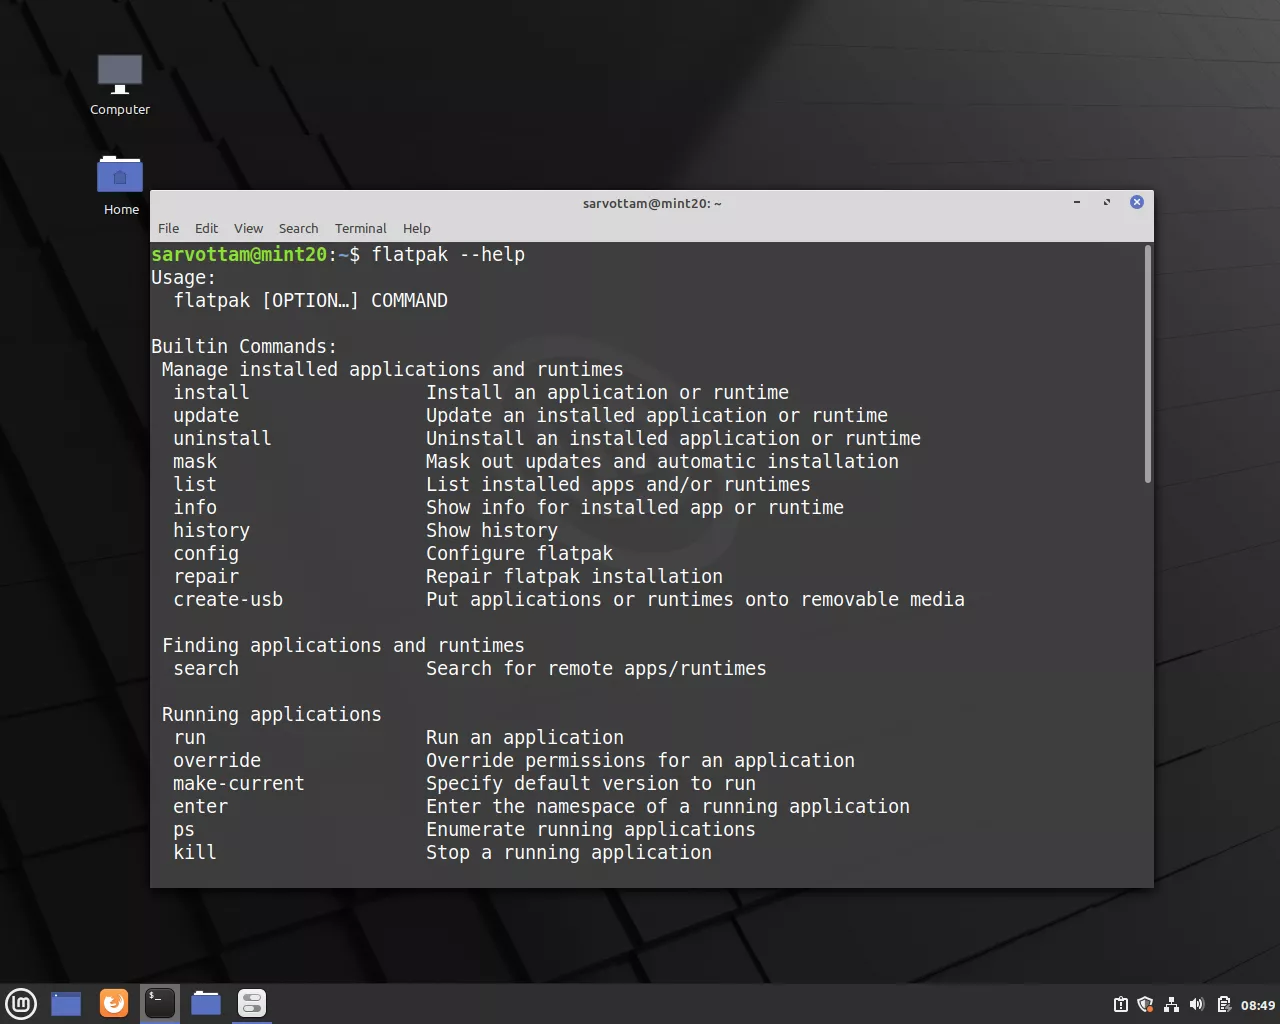 Linux Mint 20 Flatpak support